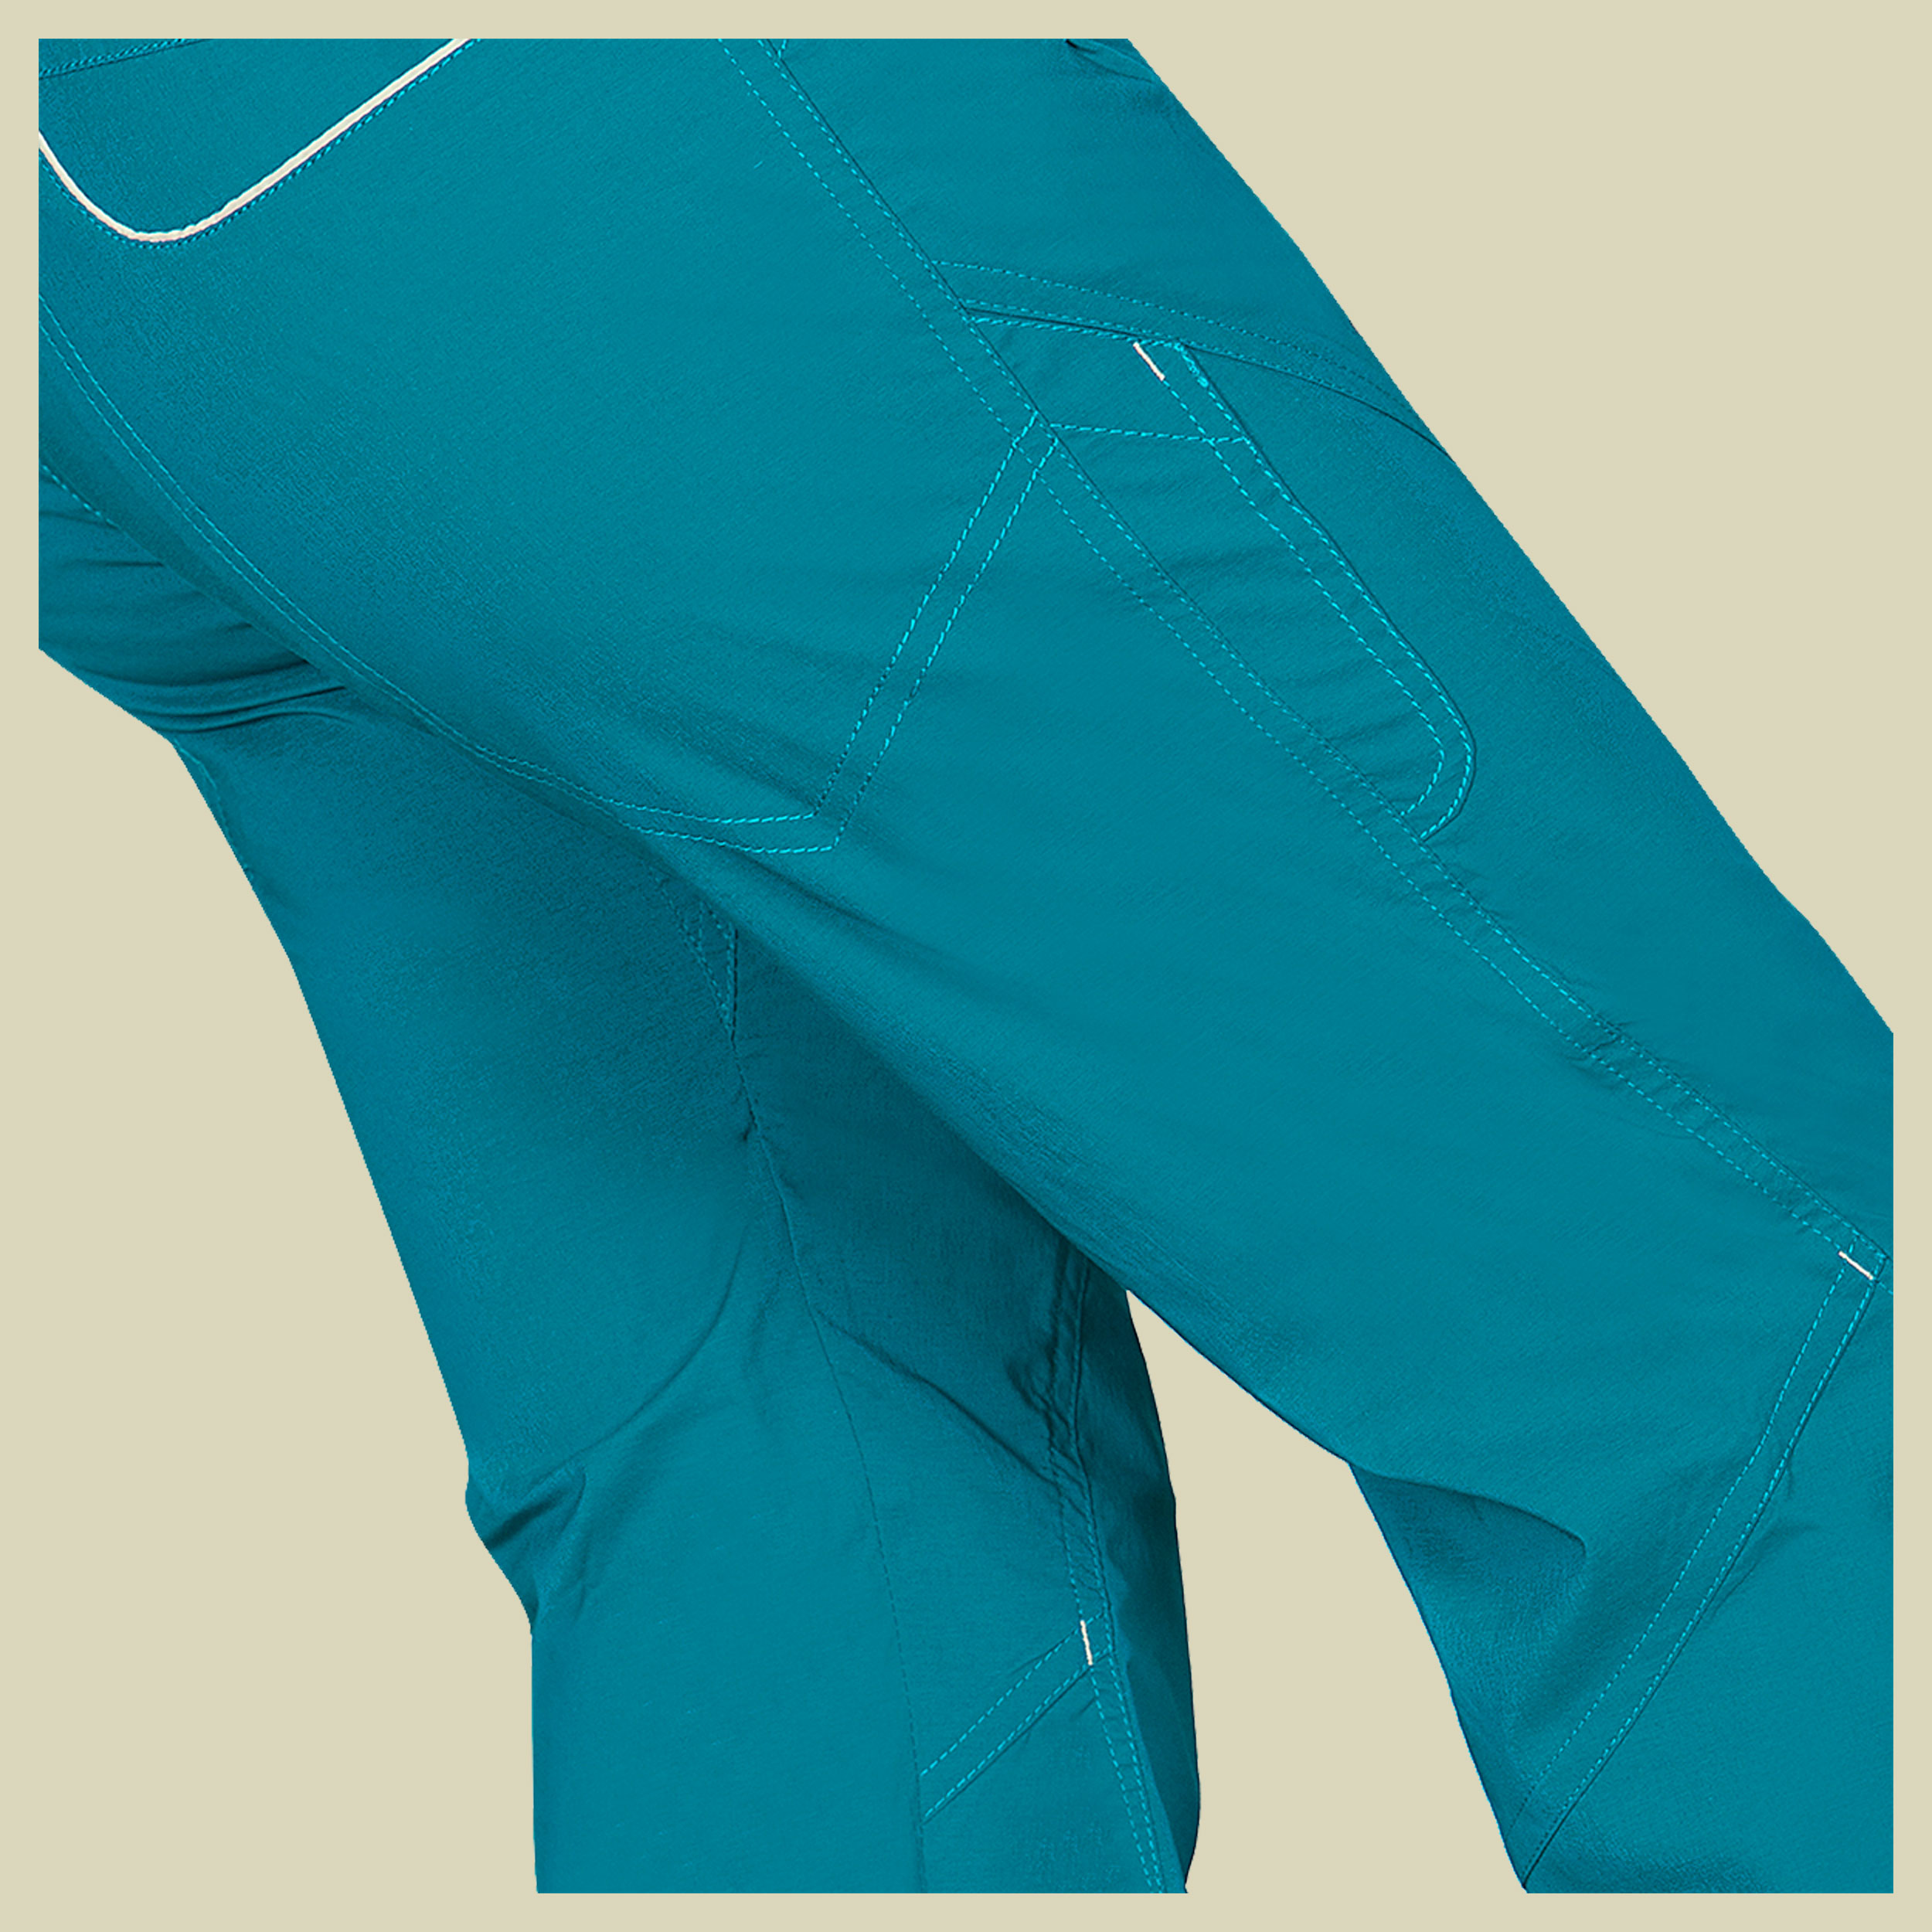 Noya Eco Pants Women Größe S Farbe turquoise deep lagoon